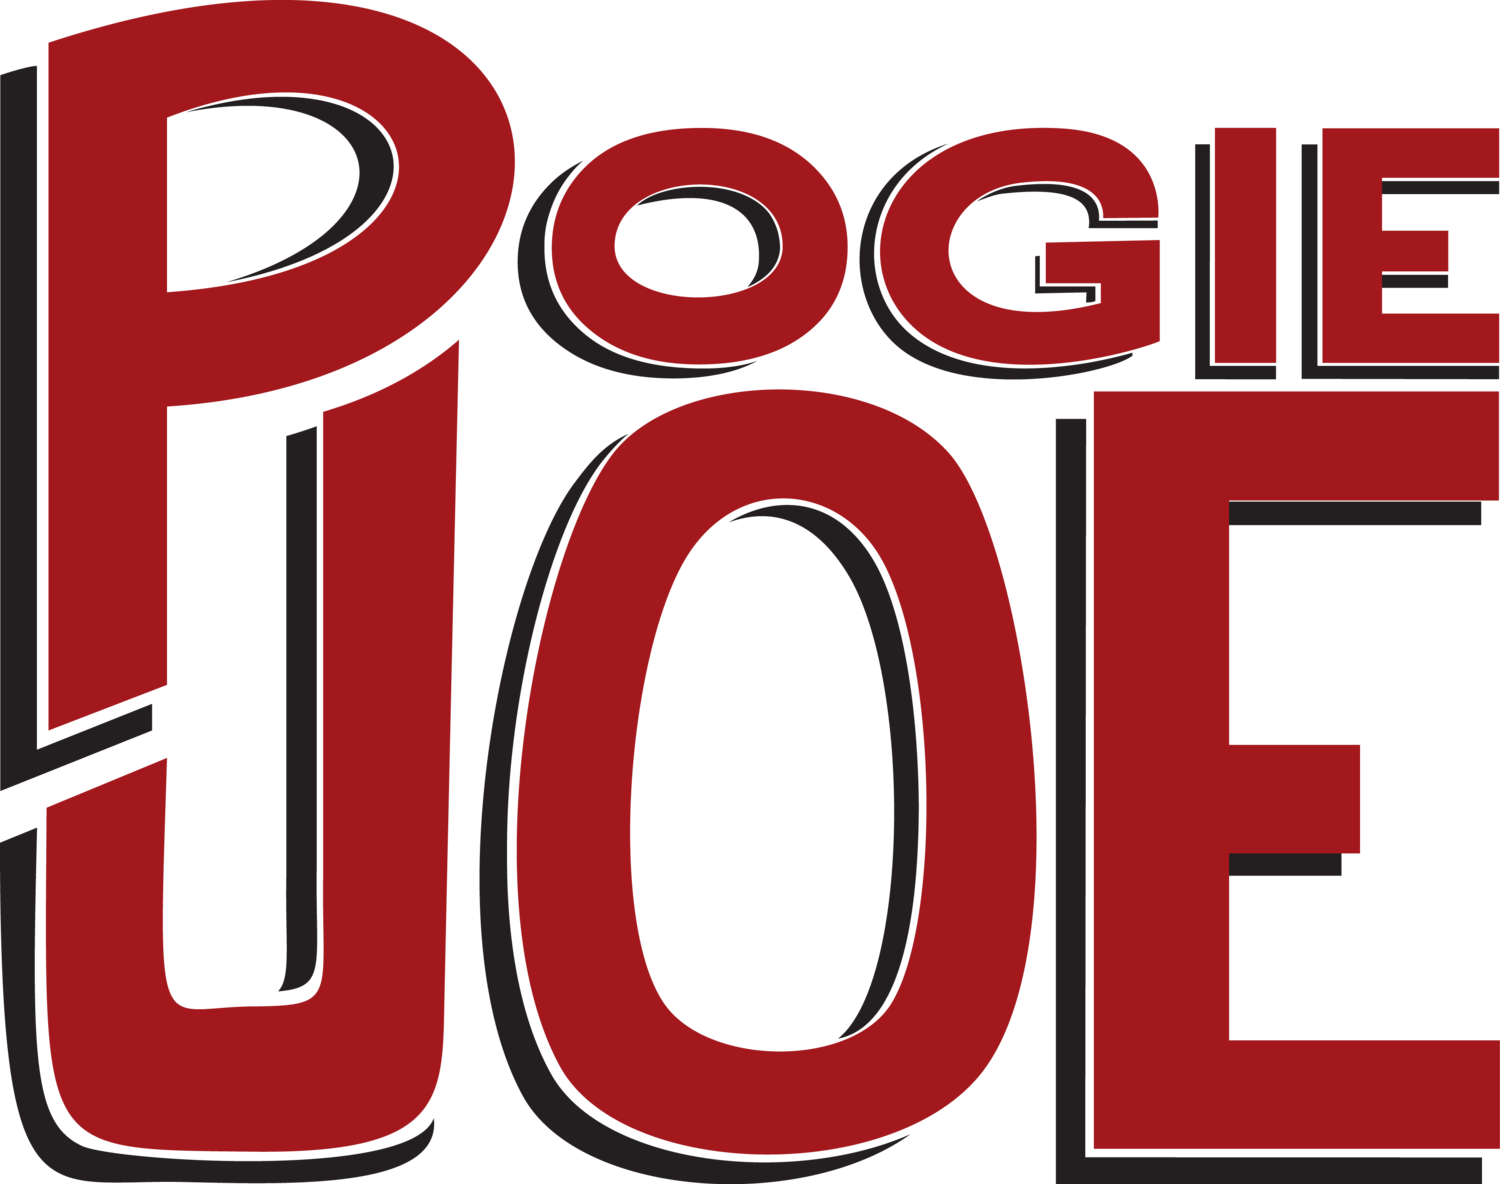 PogieJoe Productions